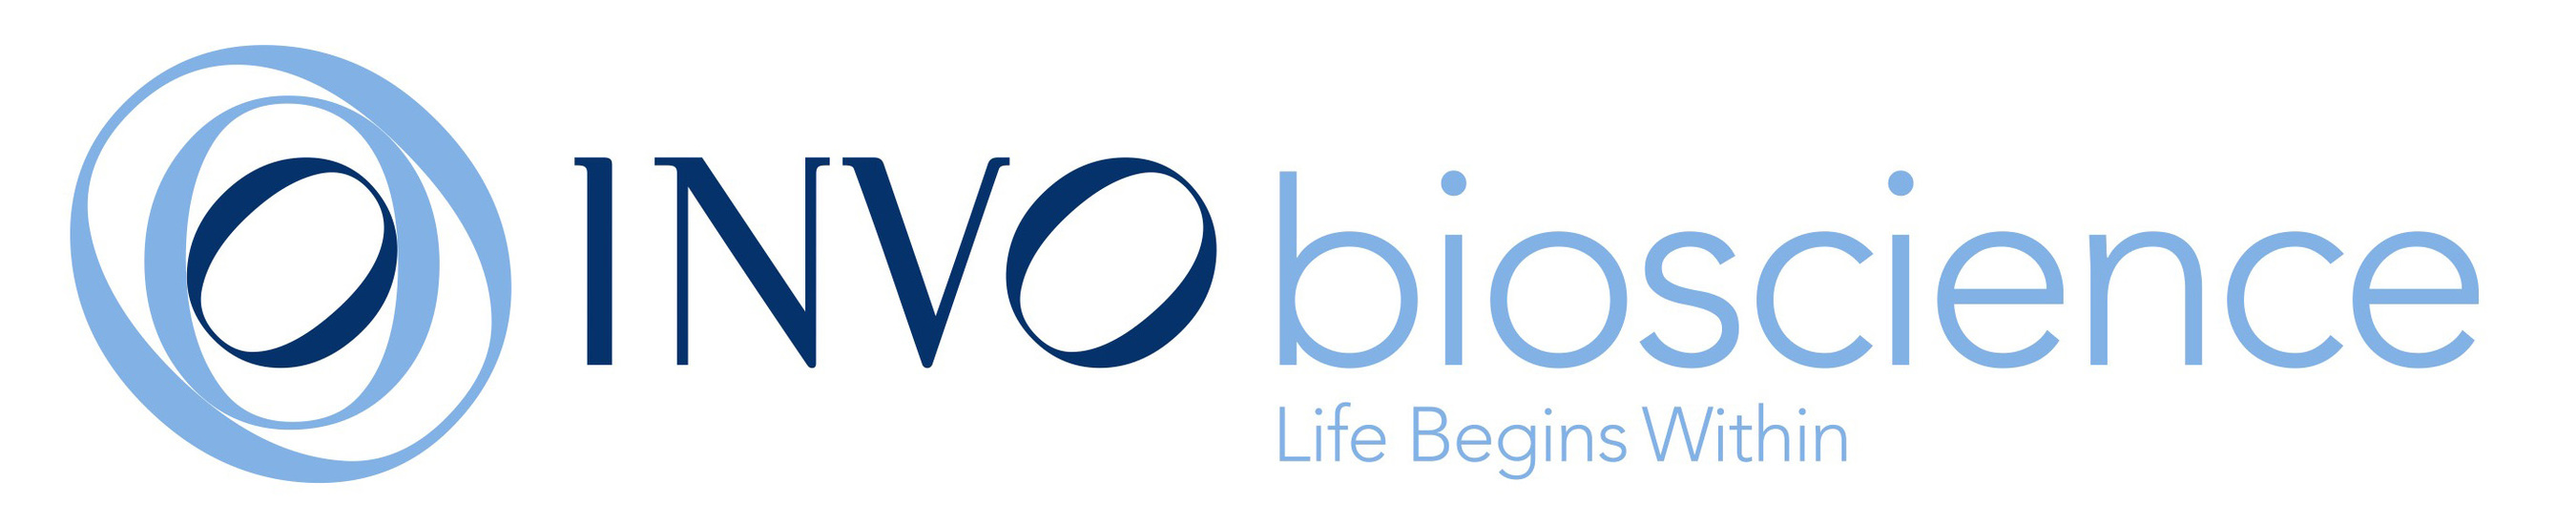 INVO_Bioscience_Logo.jpg